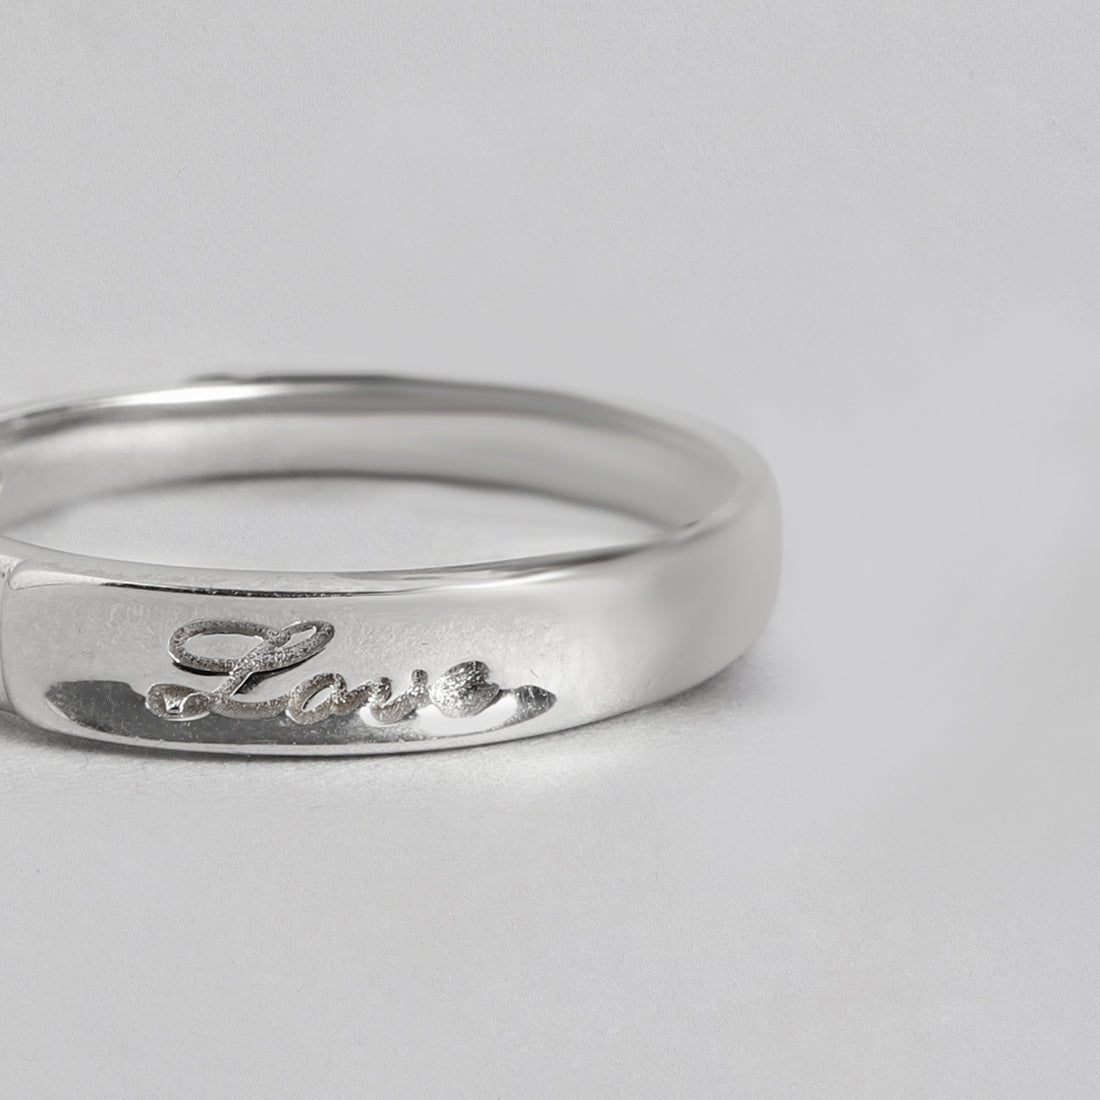 Modern Love Mens 925 Sterling Silver Ring for Him